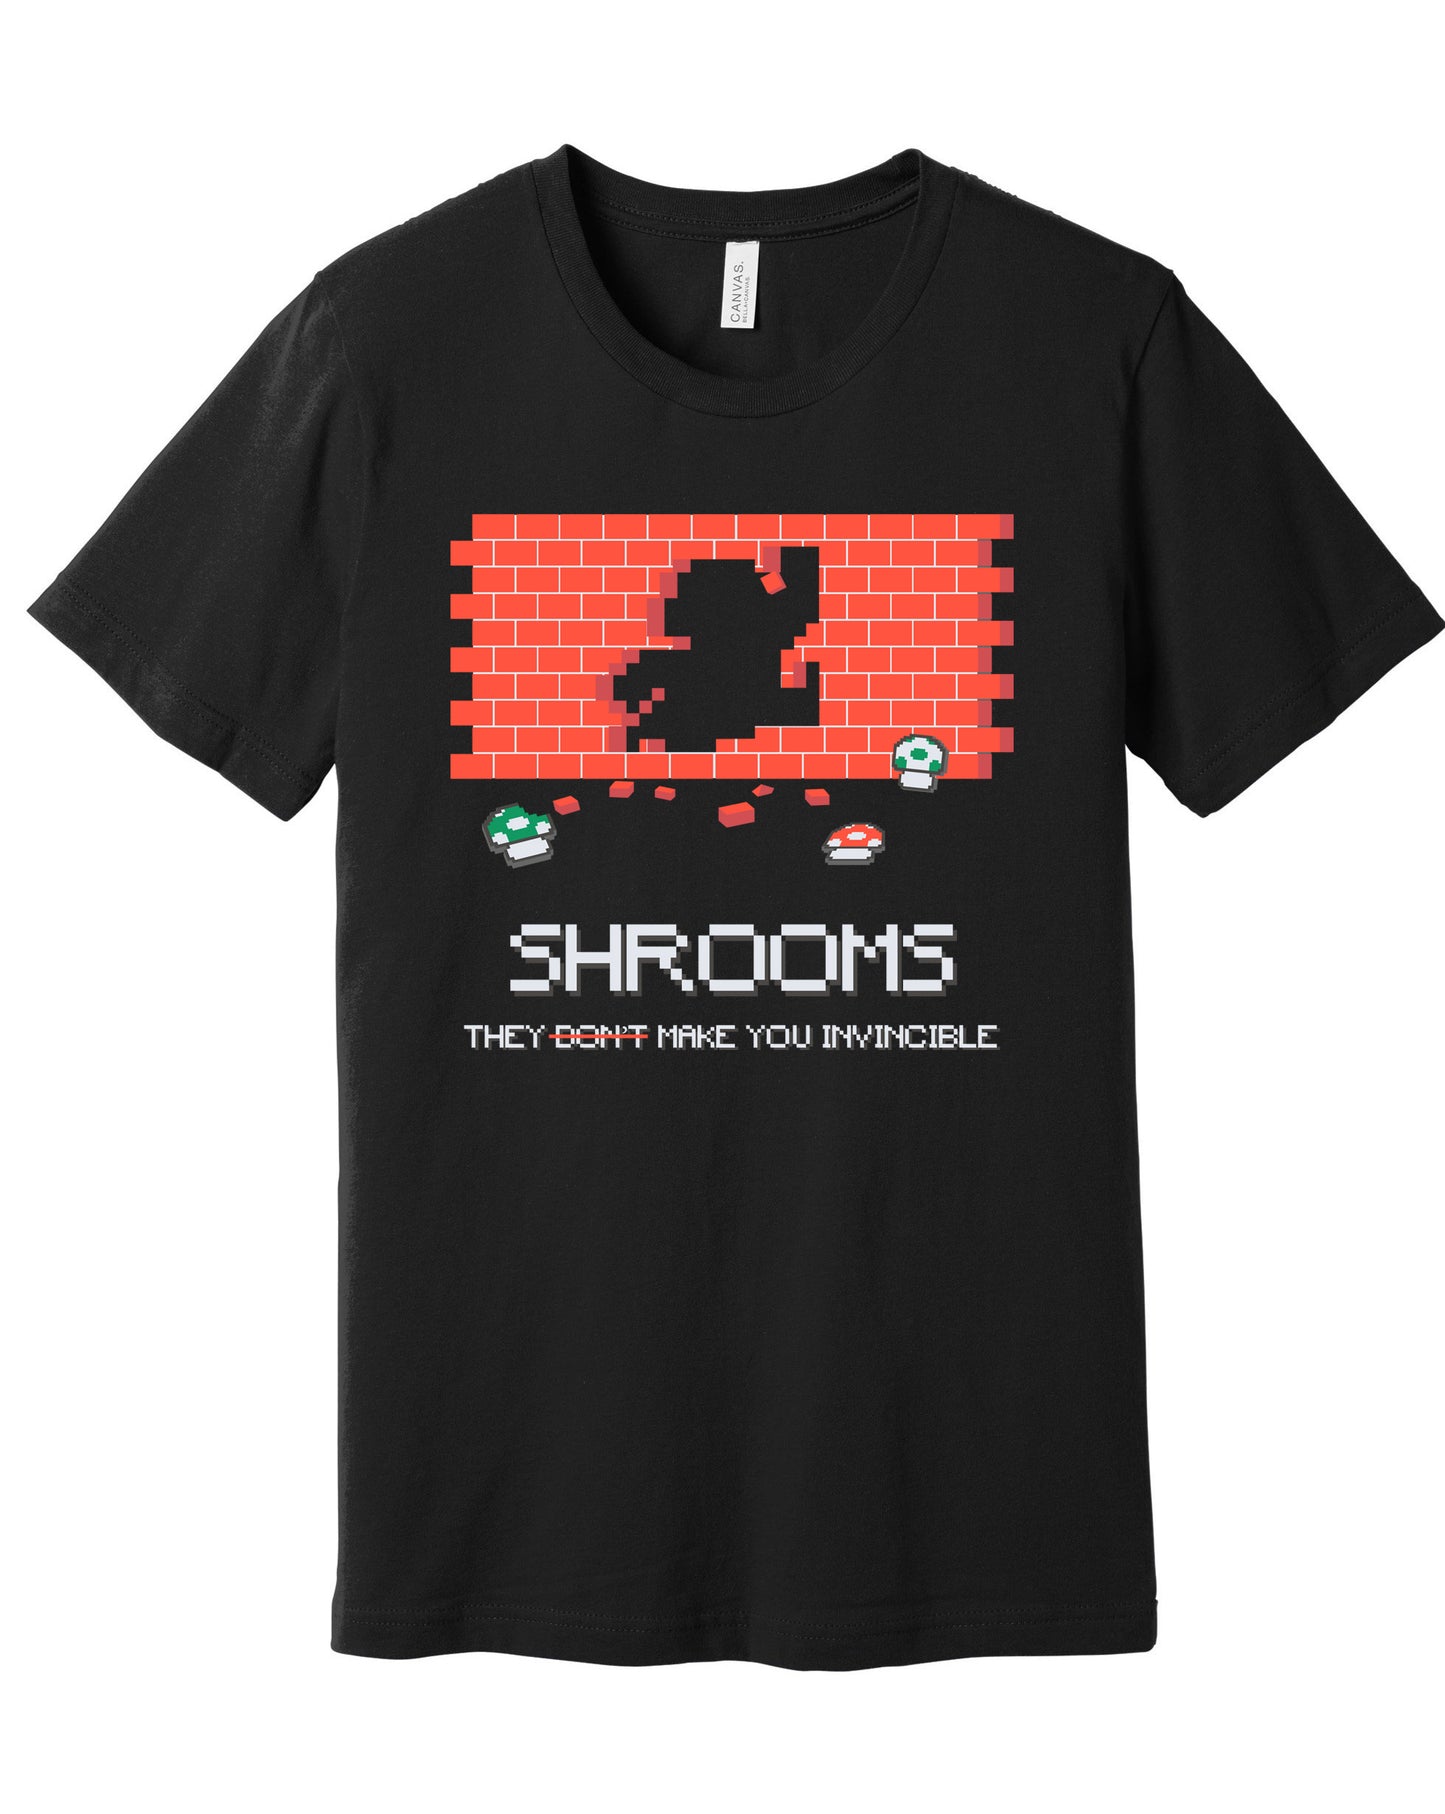 Shrooms Make You Invincible